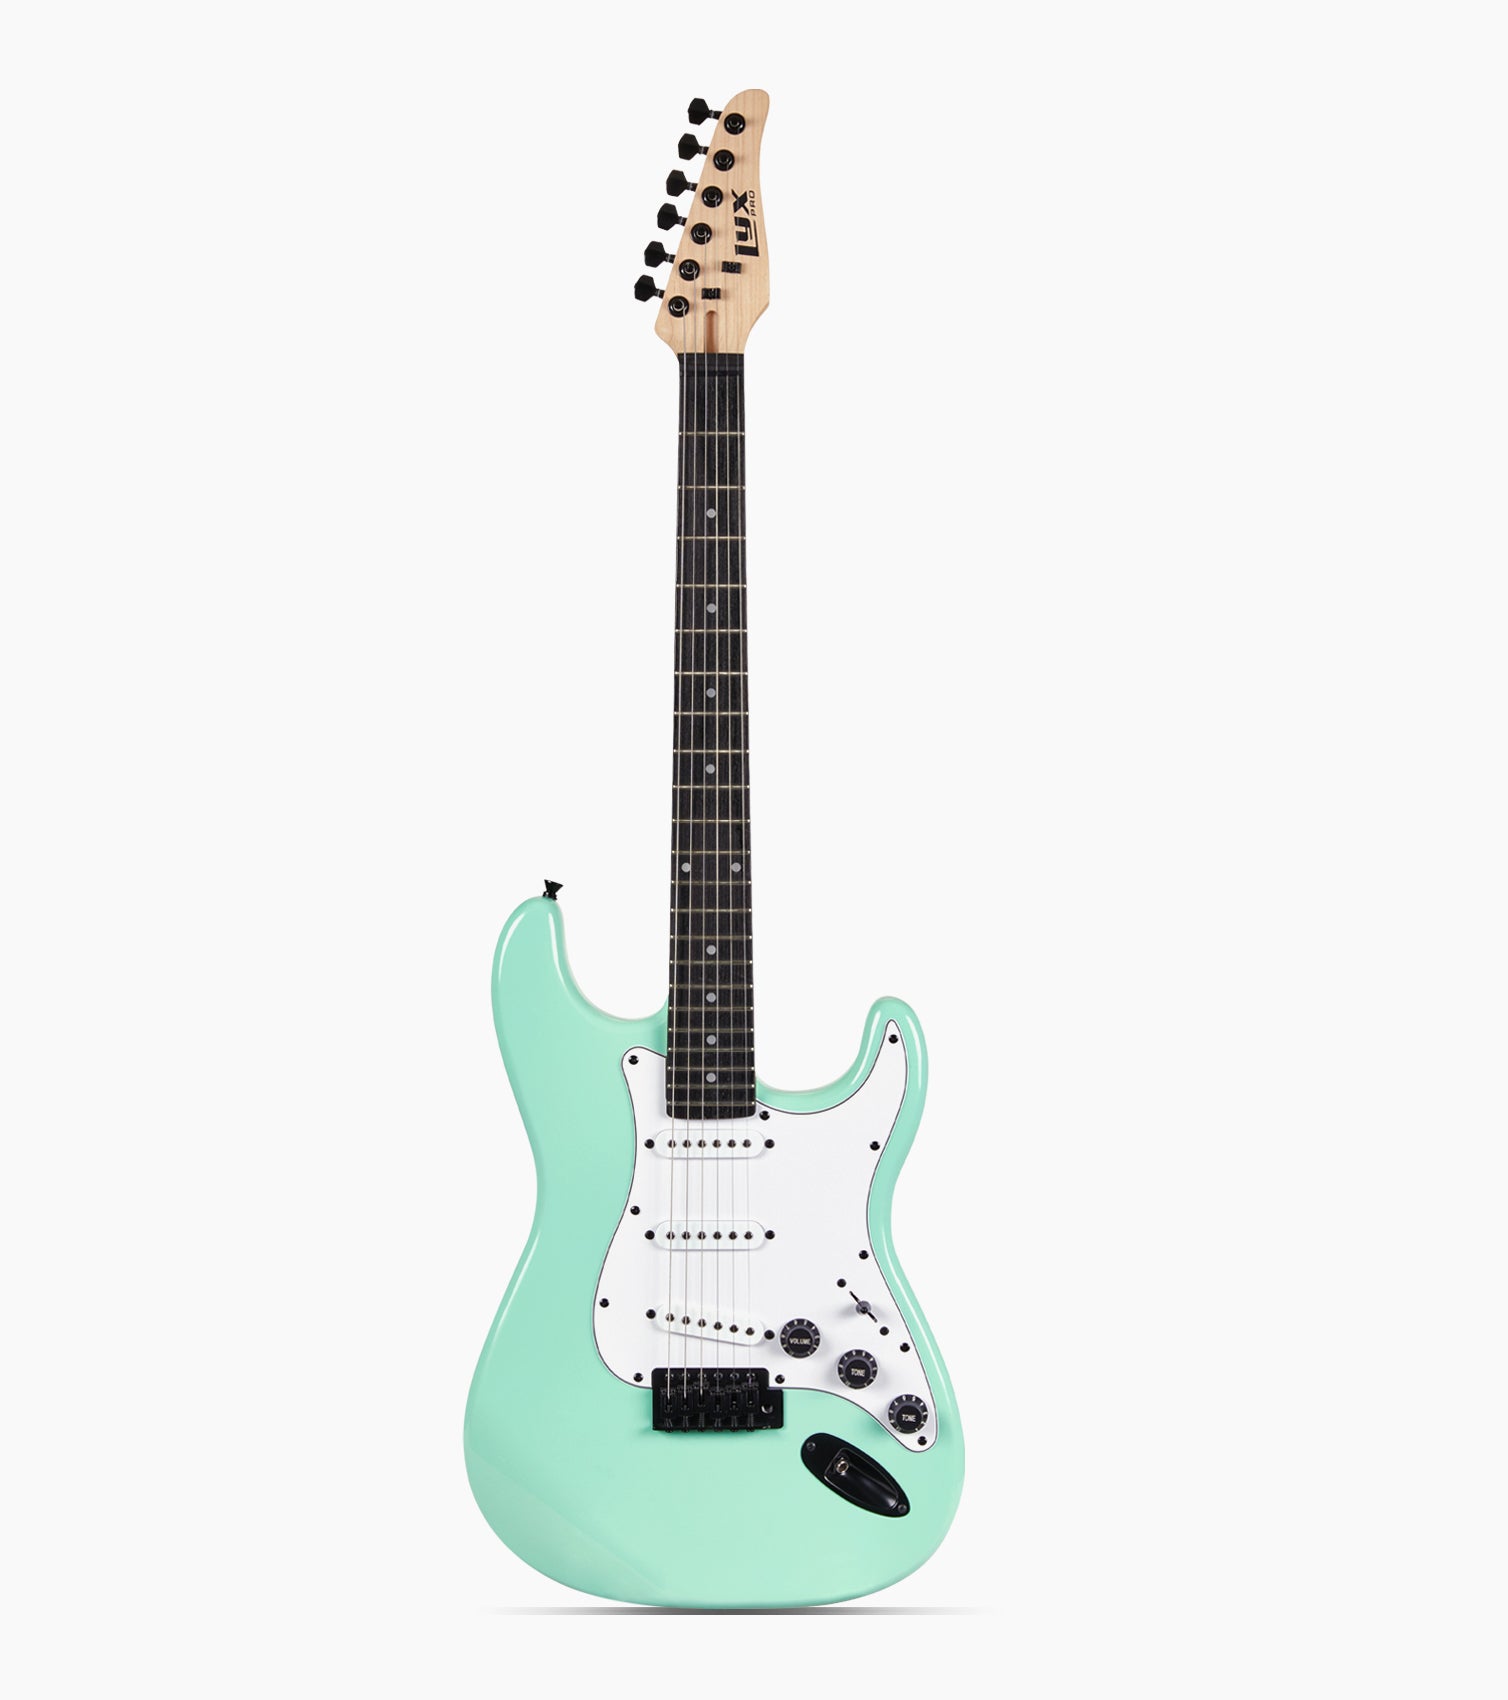 Green double-cutaway beginner electric guitar